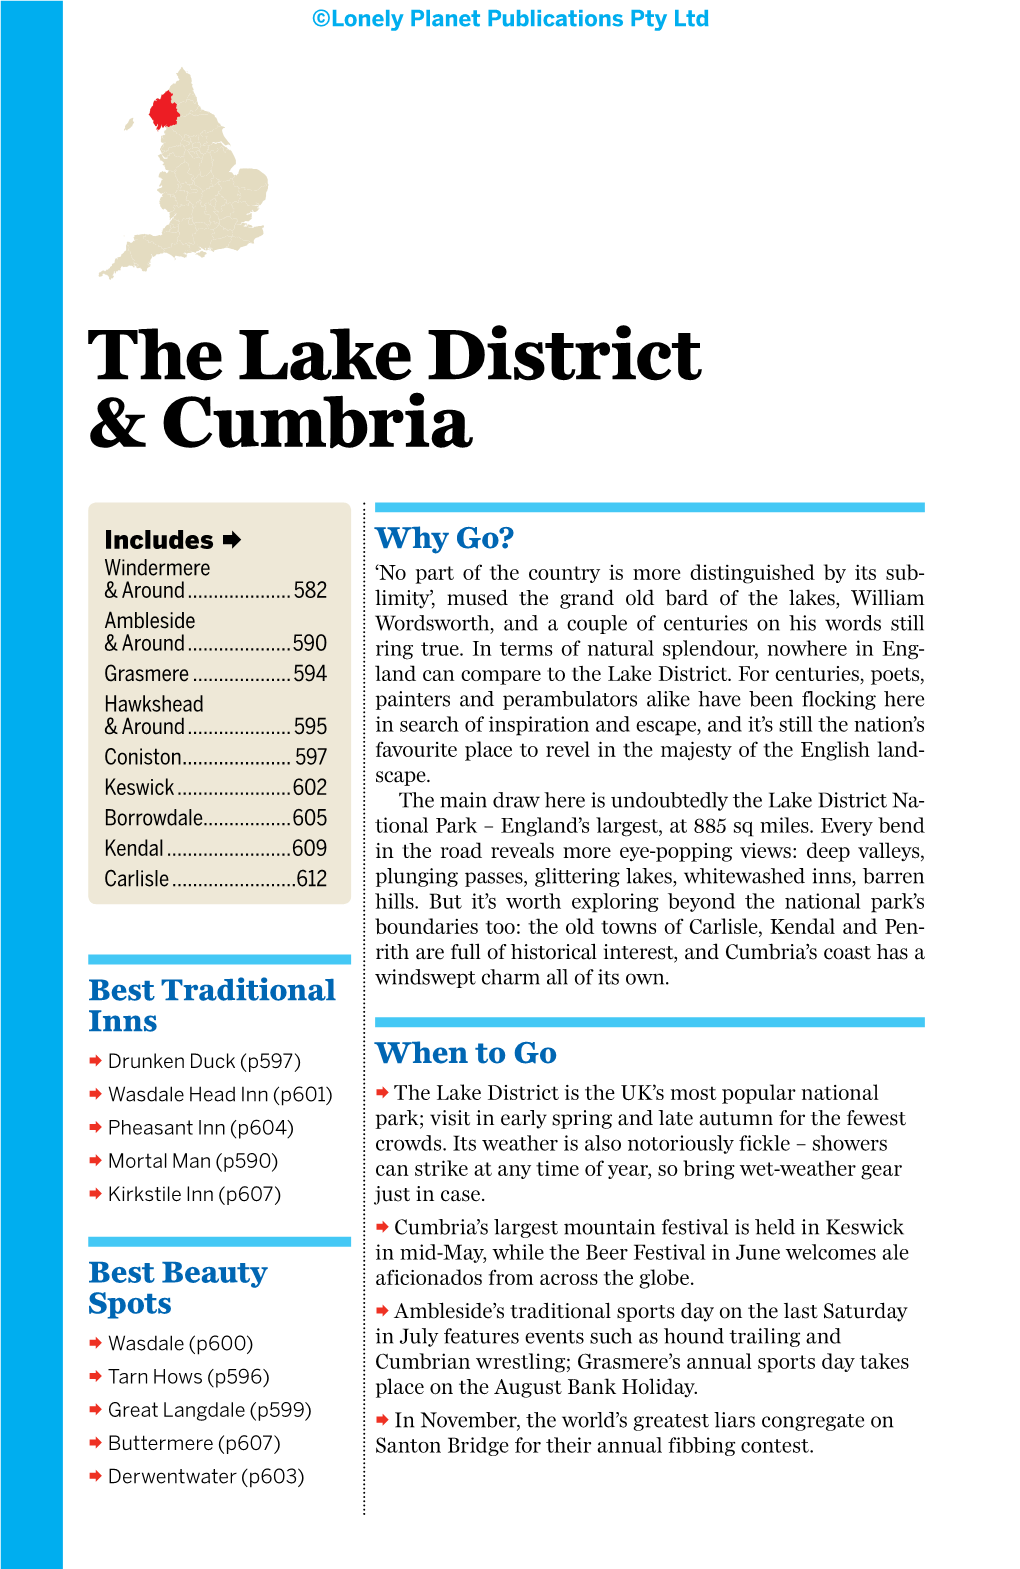 The Lake District & Cumbria